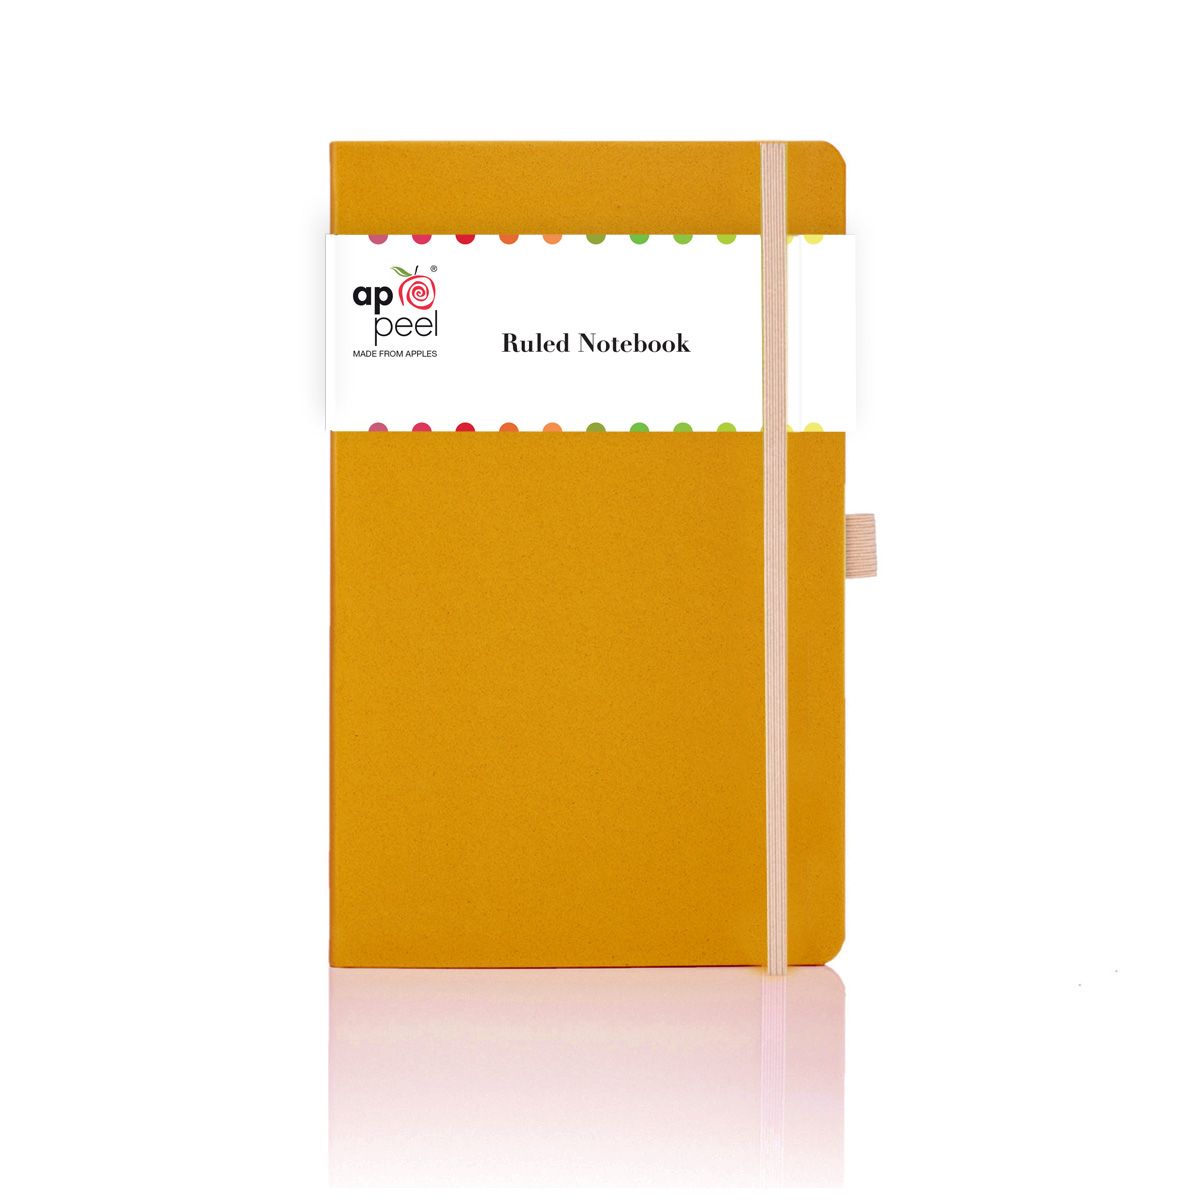 Appeel Eco Notebook made from apple / Appeel Eco σημειωματάριο από μήλο